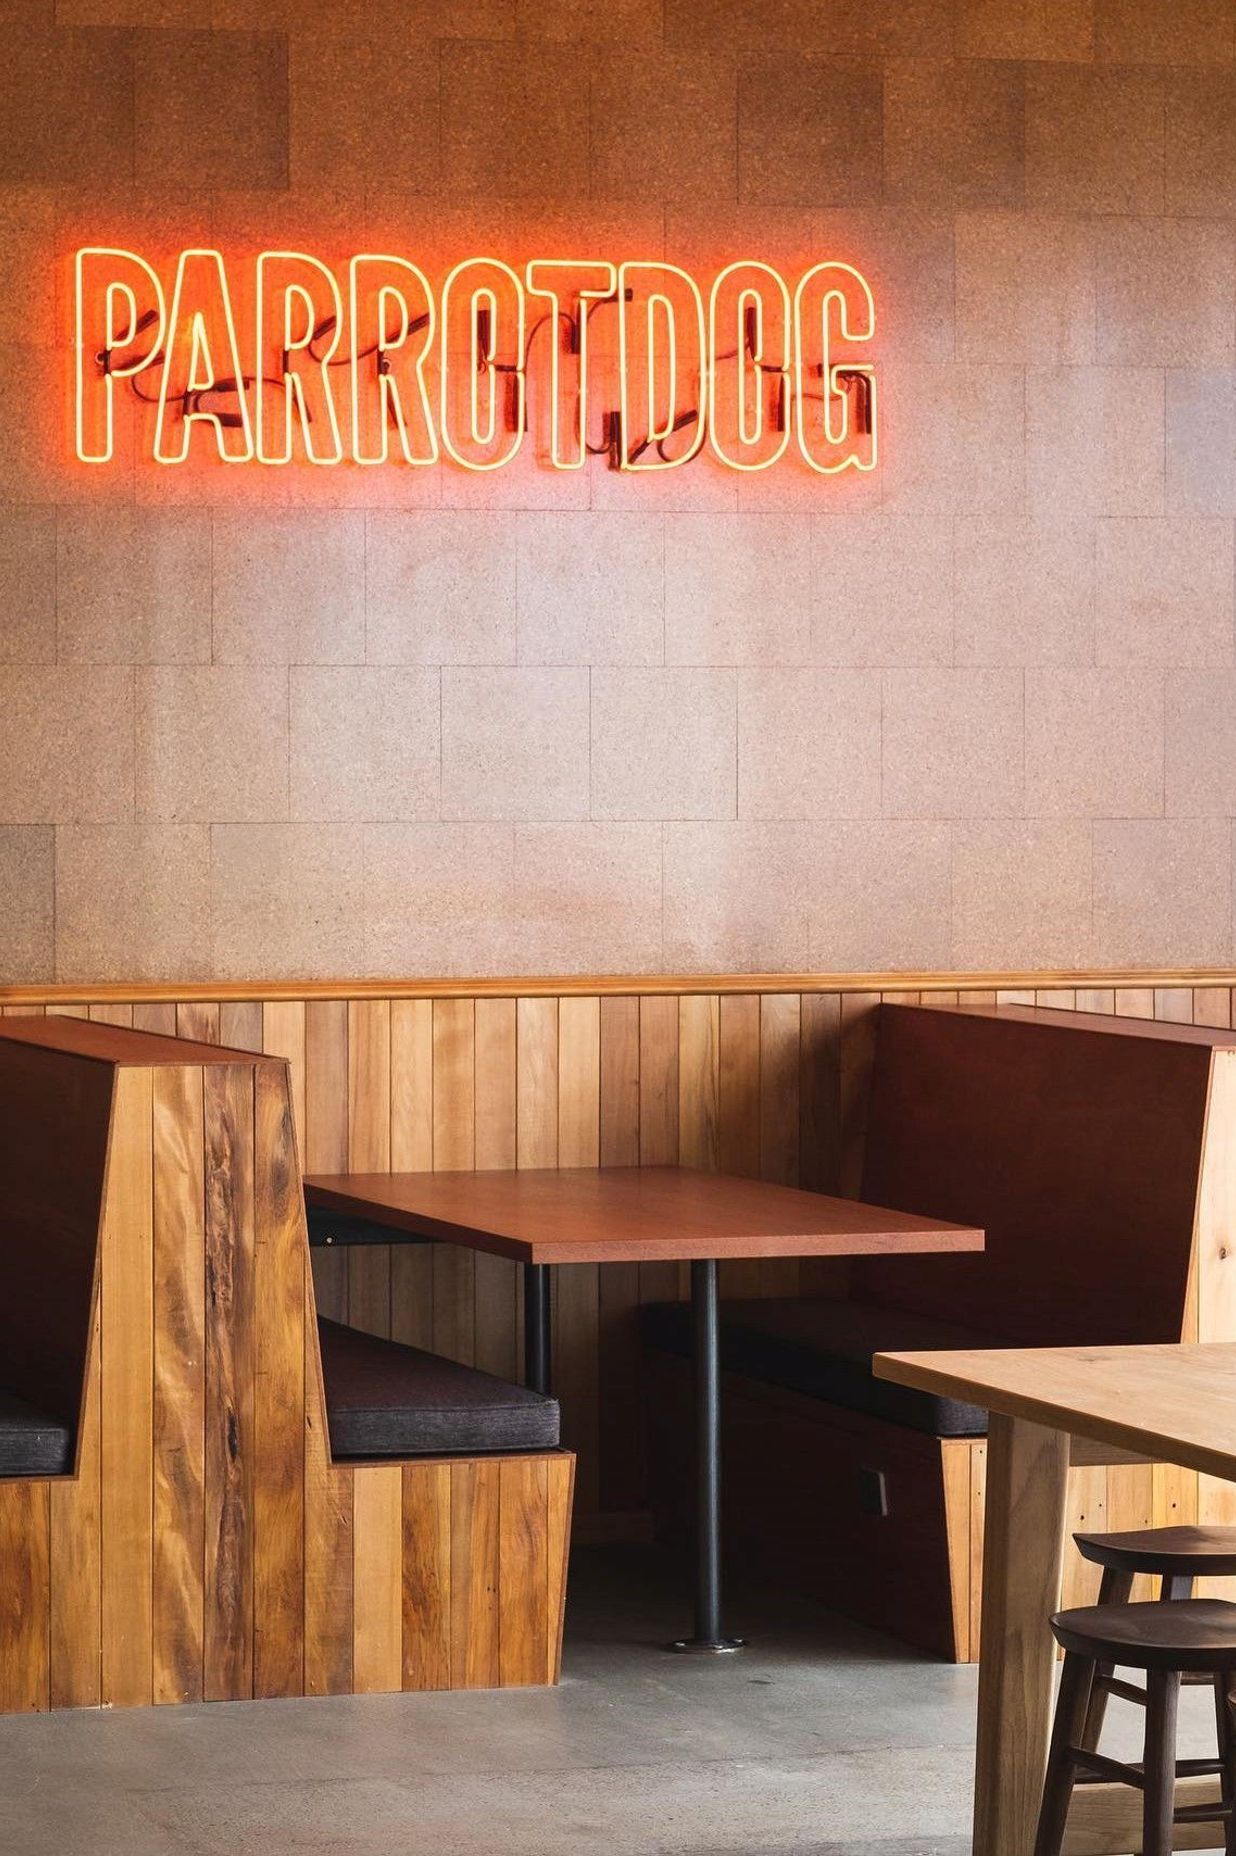 Parrotdog Bar